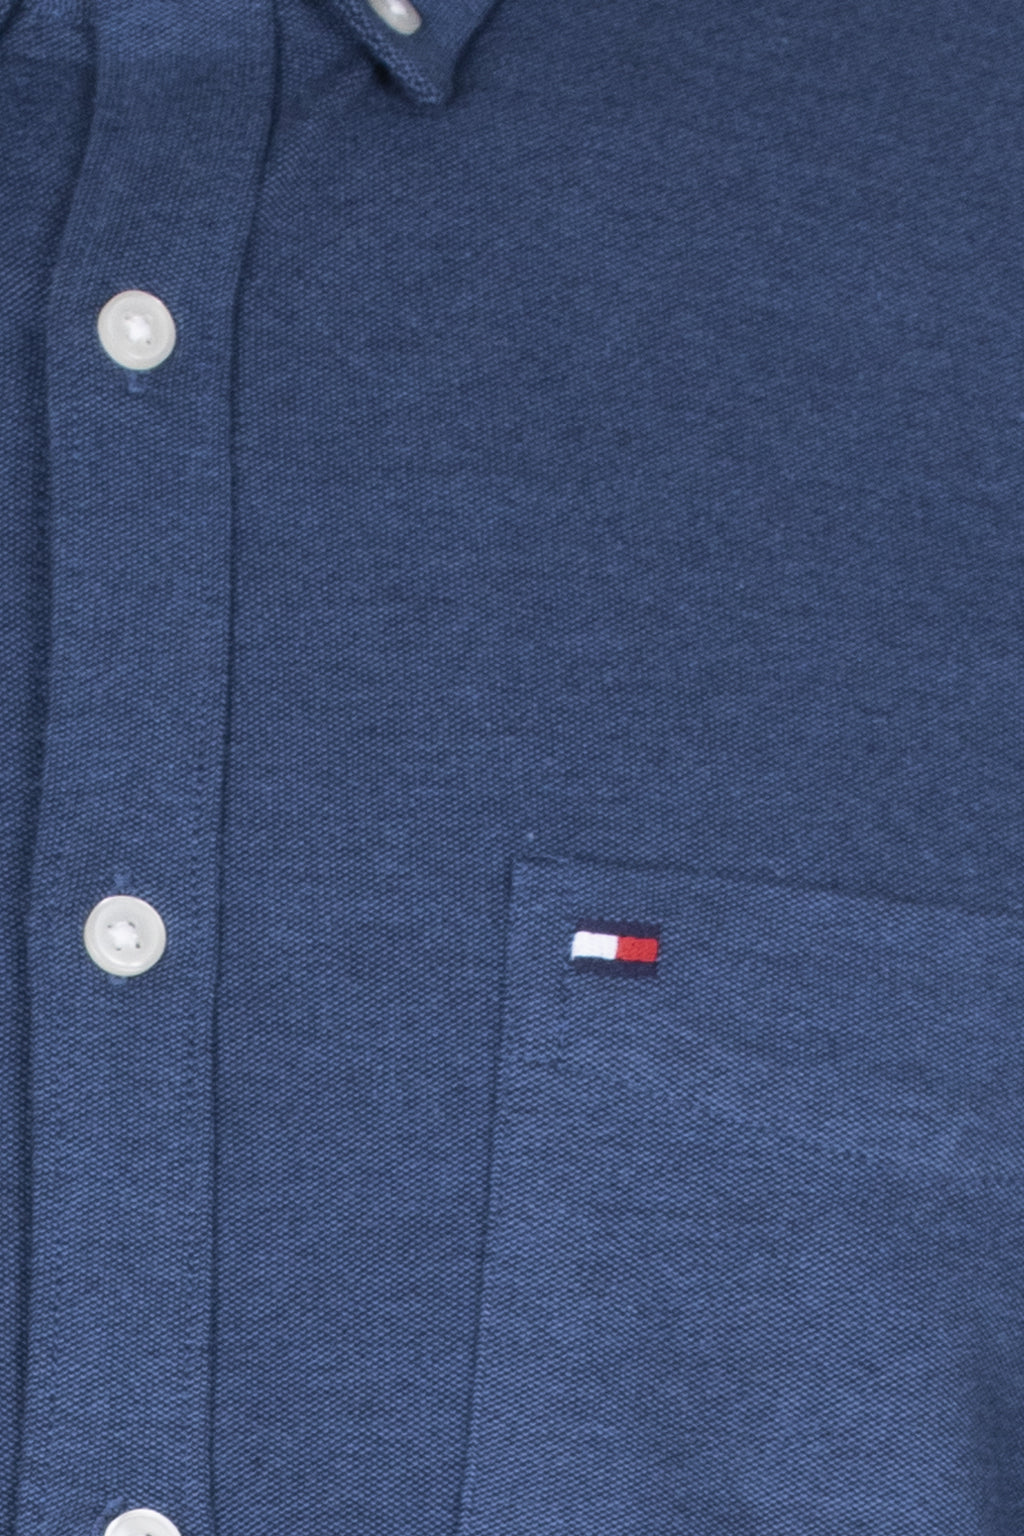 Tommy Hilfiger - Blue Cotton Shirt